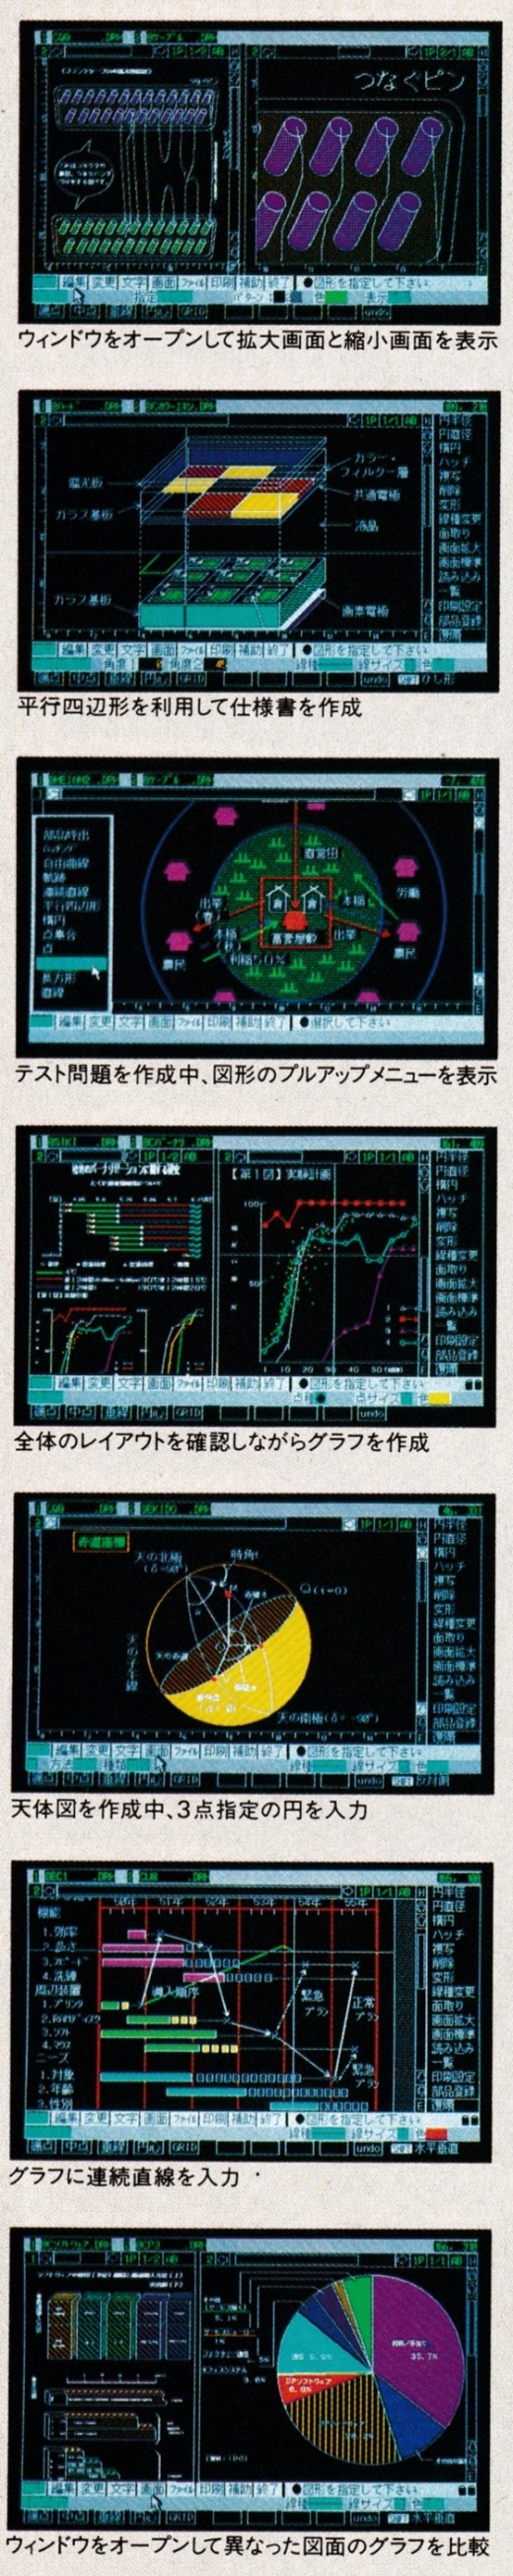 ASCII1987(02)a09花子1_W520.jpg